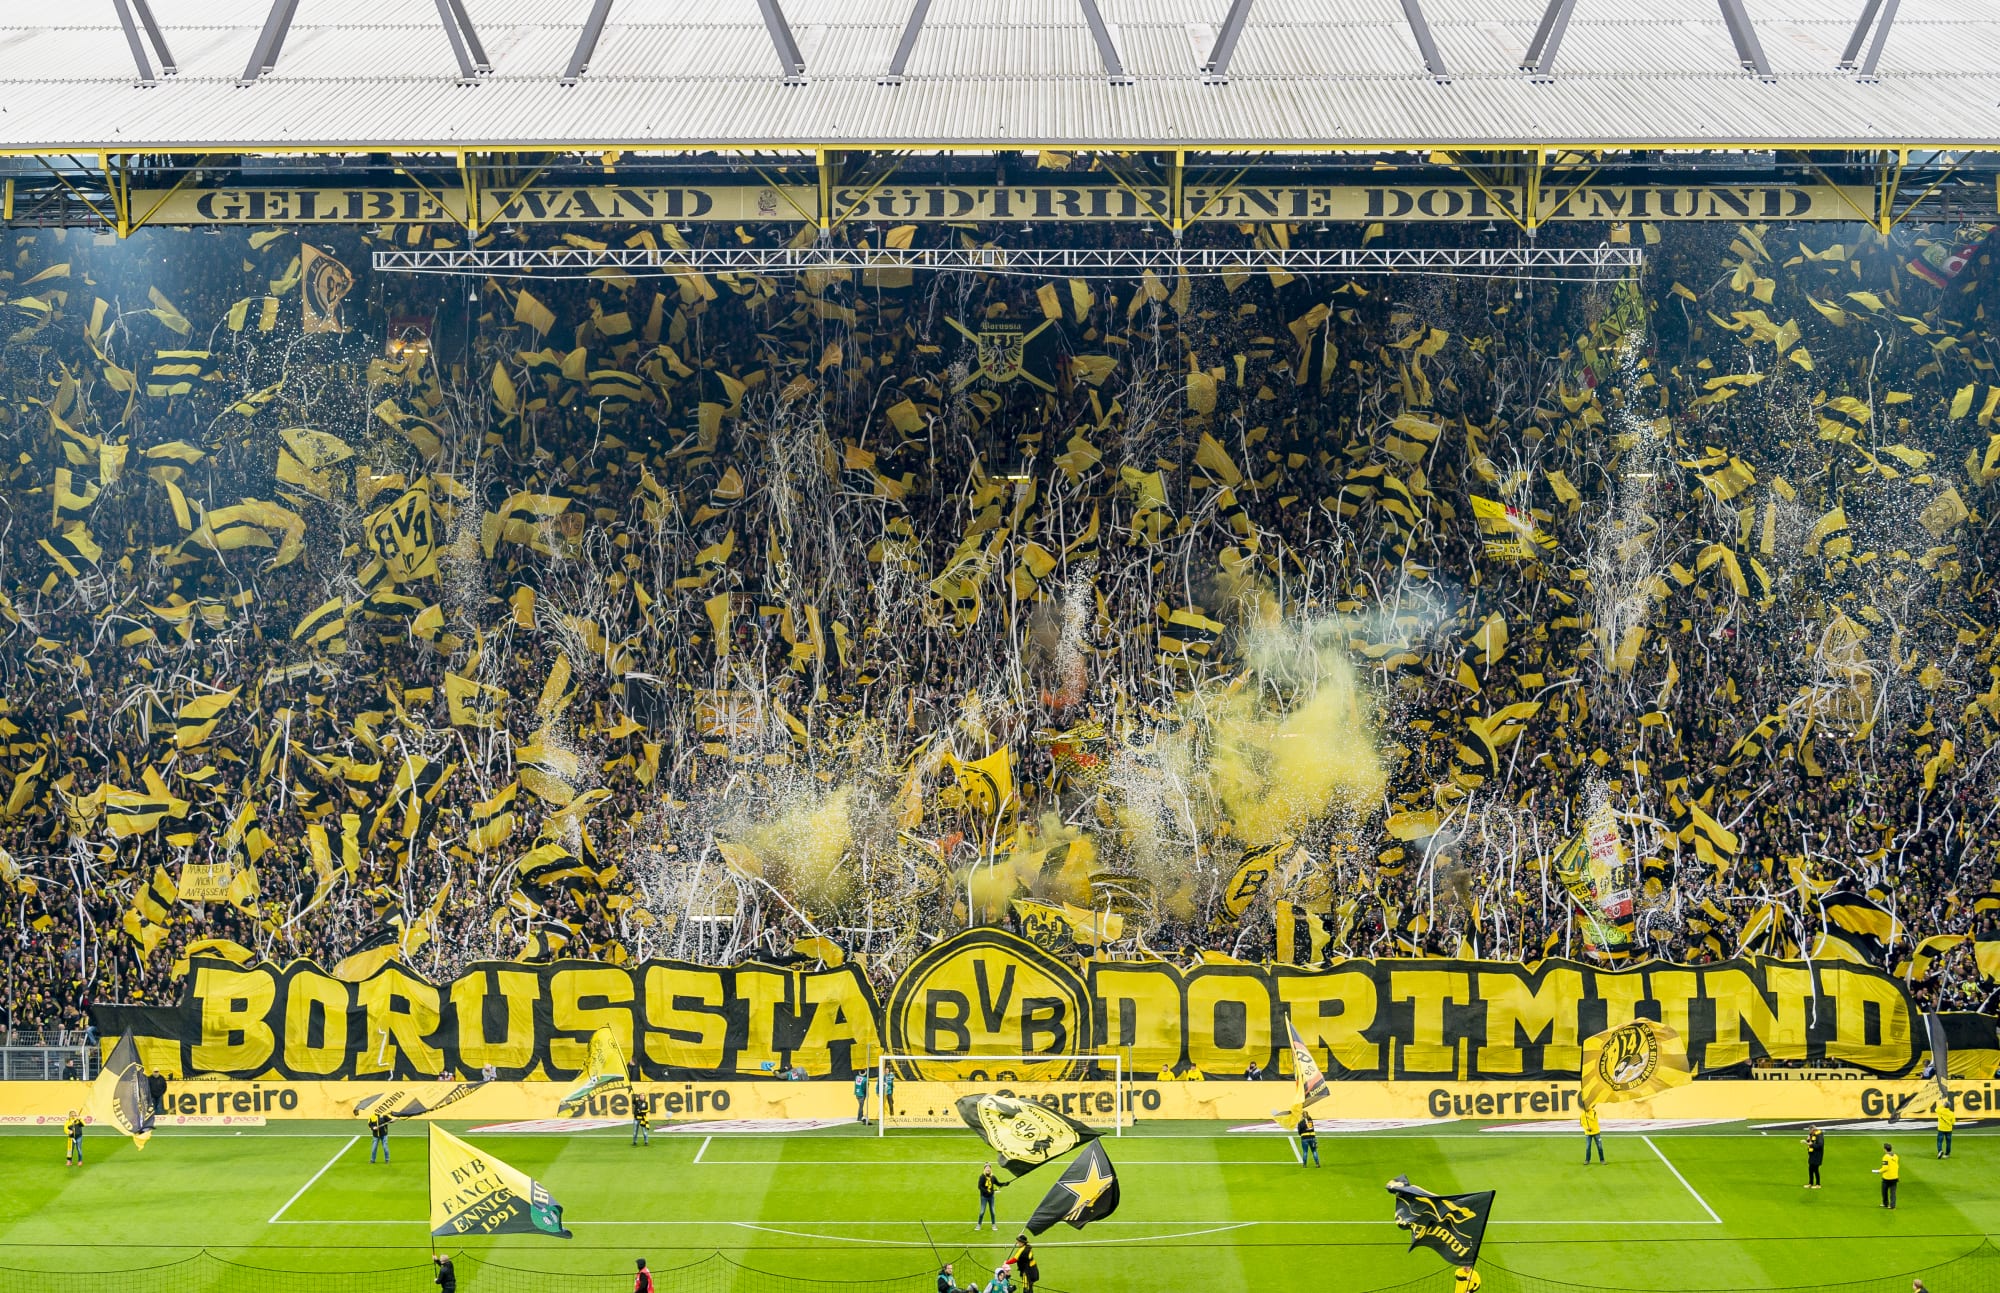 Borussia Dortmund Football Club Crowd - Attention Seekers Blog image